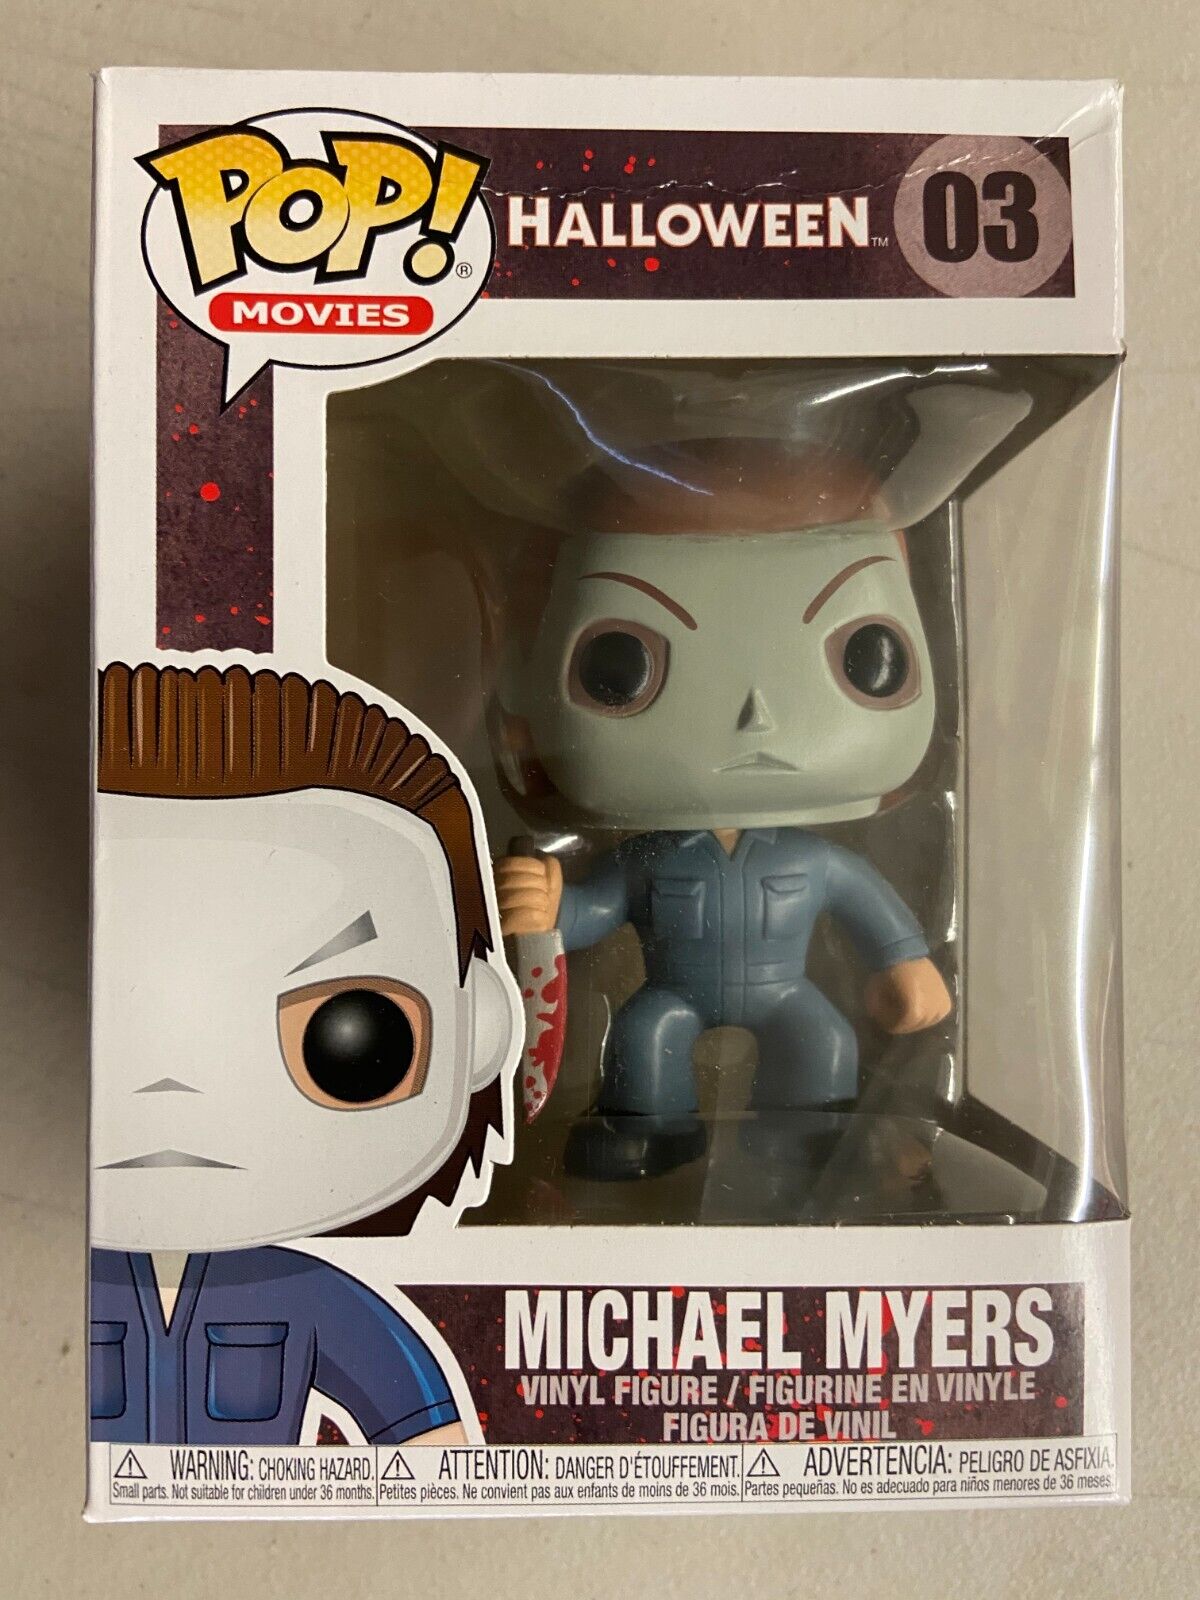 Funko Pop Horror Movies Halloween Michael Myers Vinyl Figure #03 DAMAGED BOX